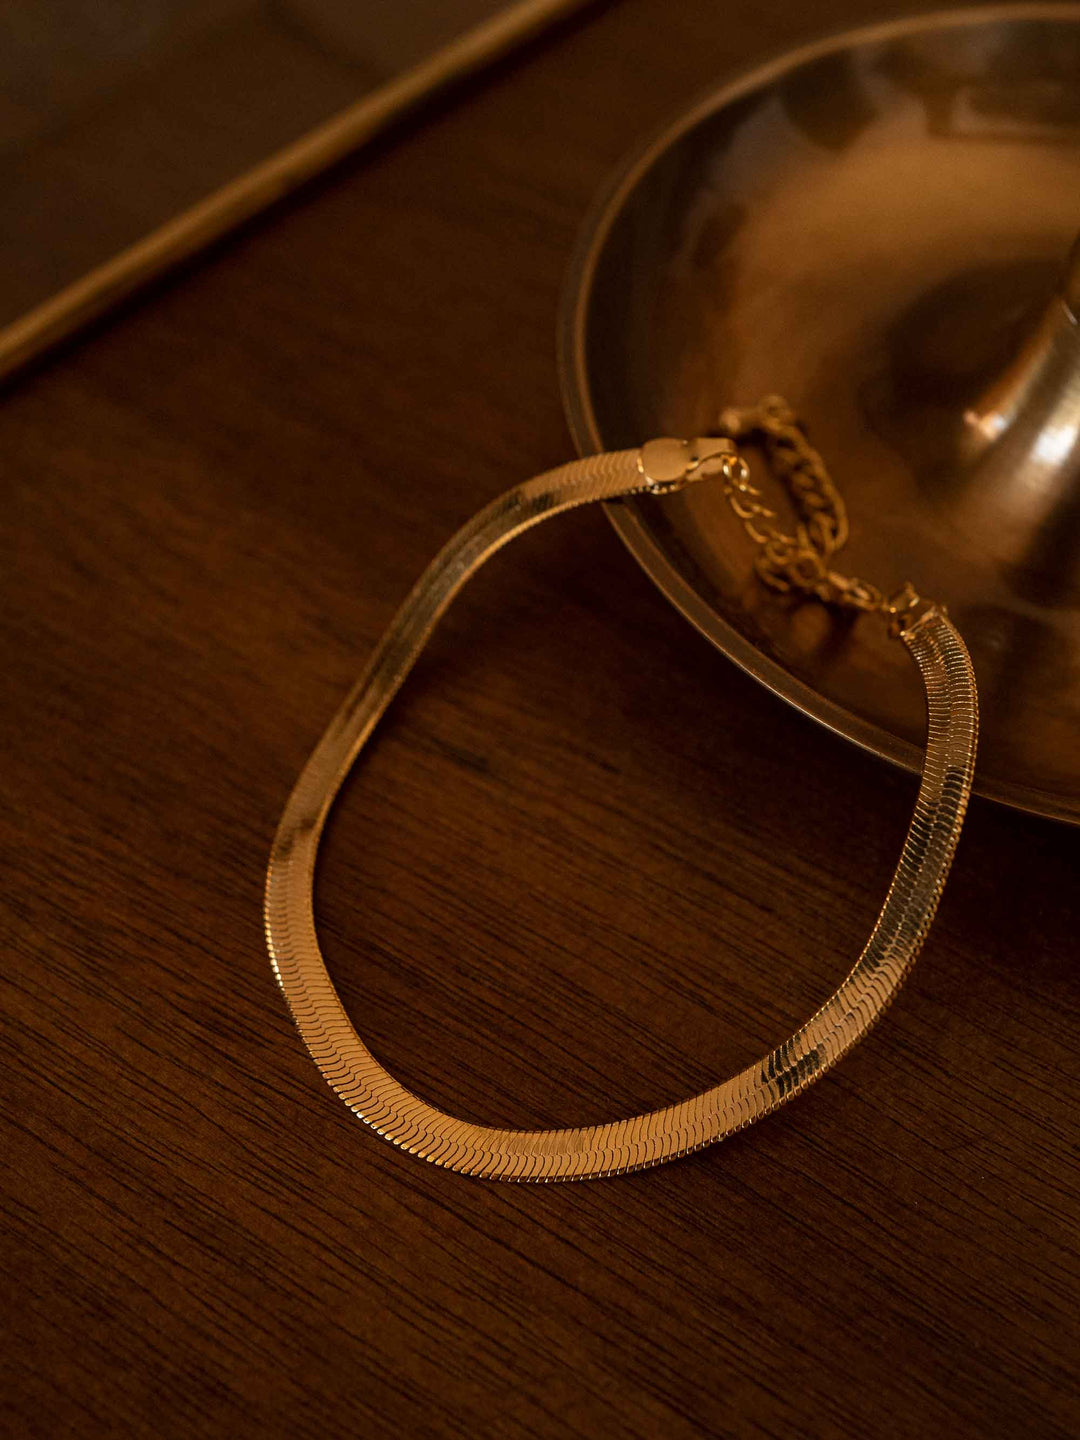 A gold bracelet in the shape of a snake bone chain